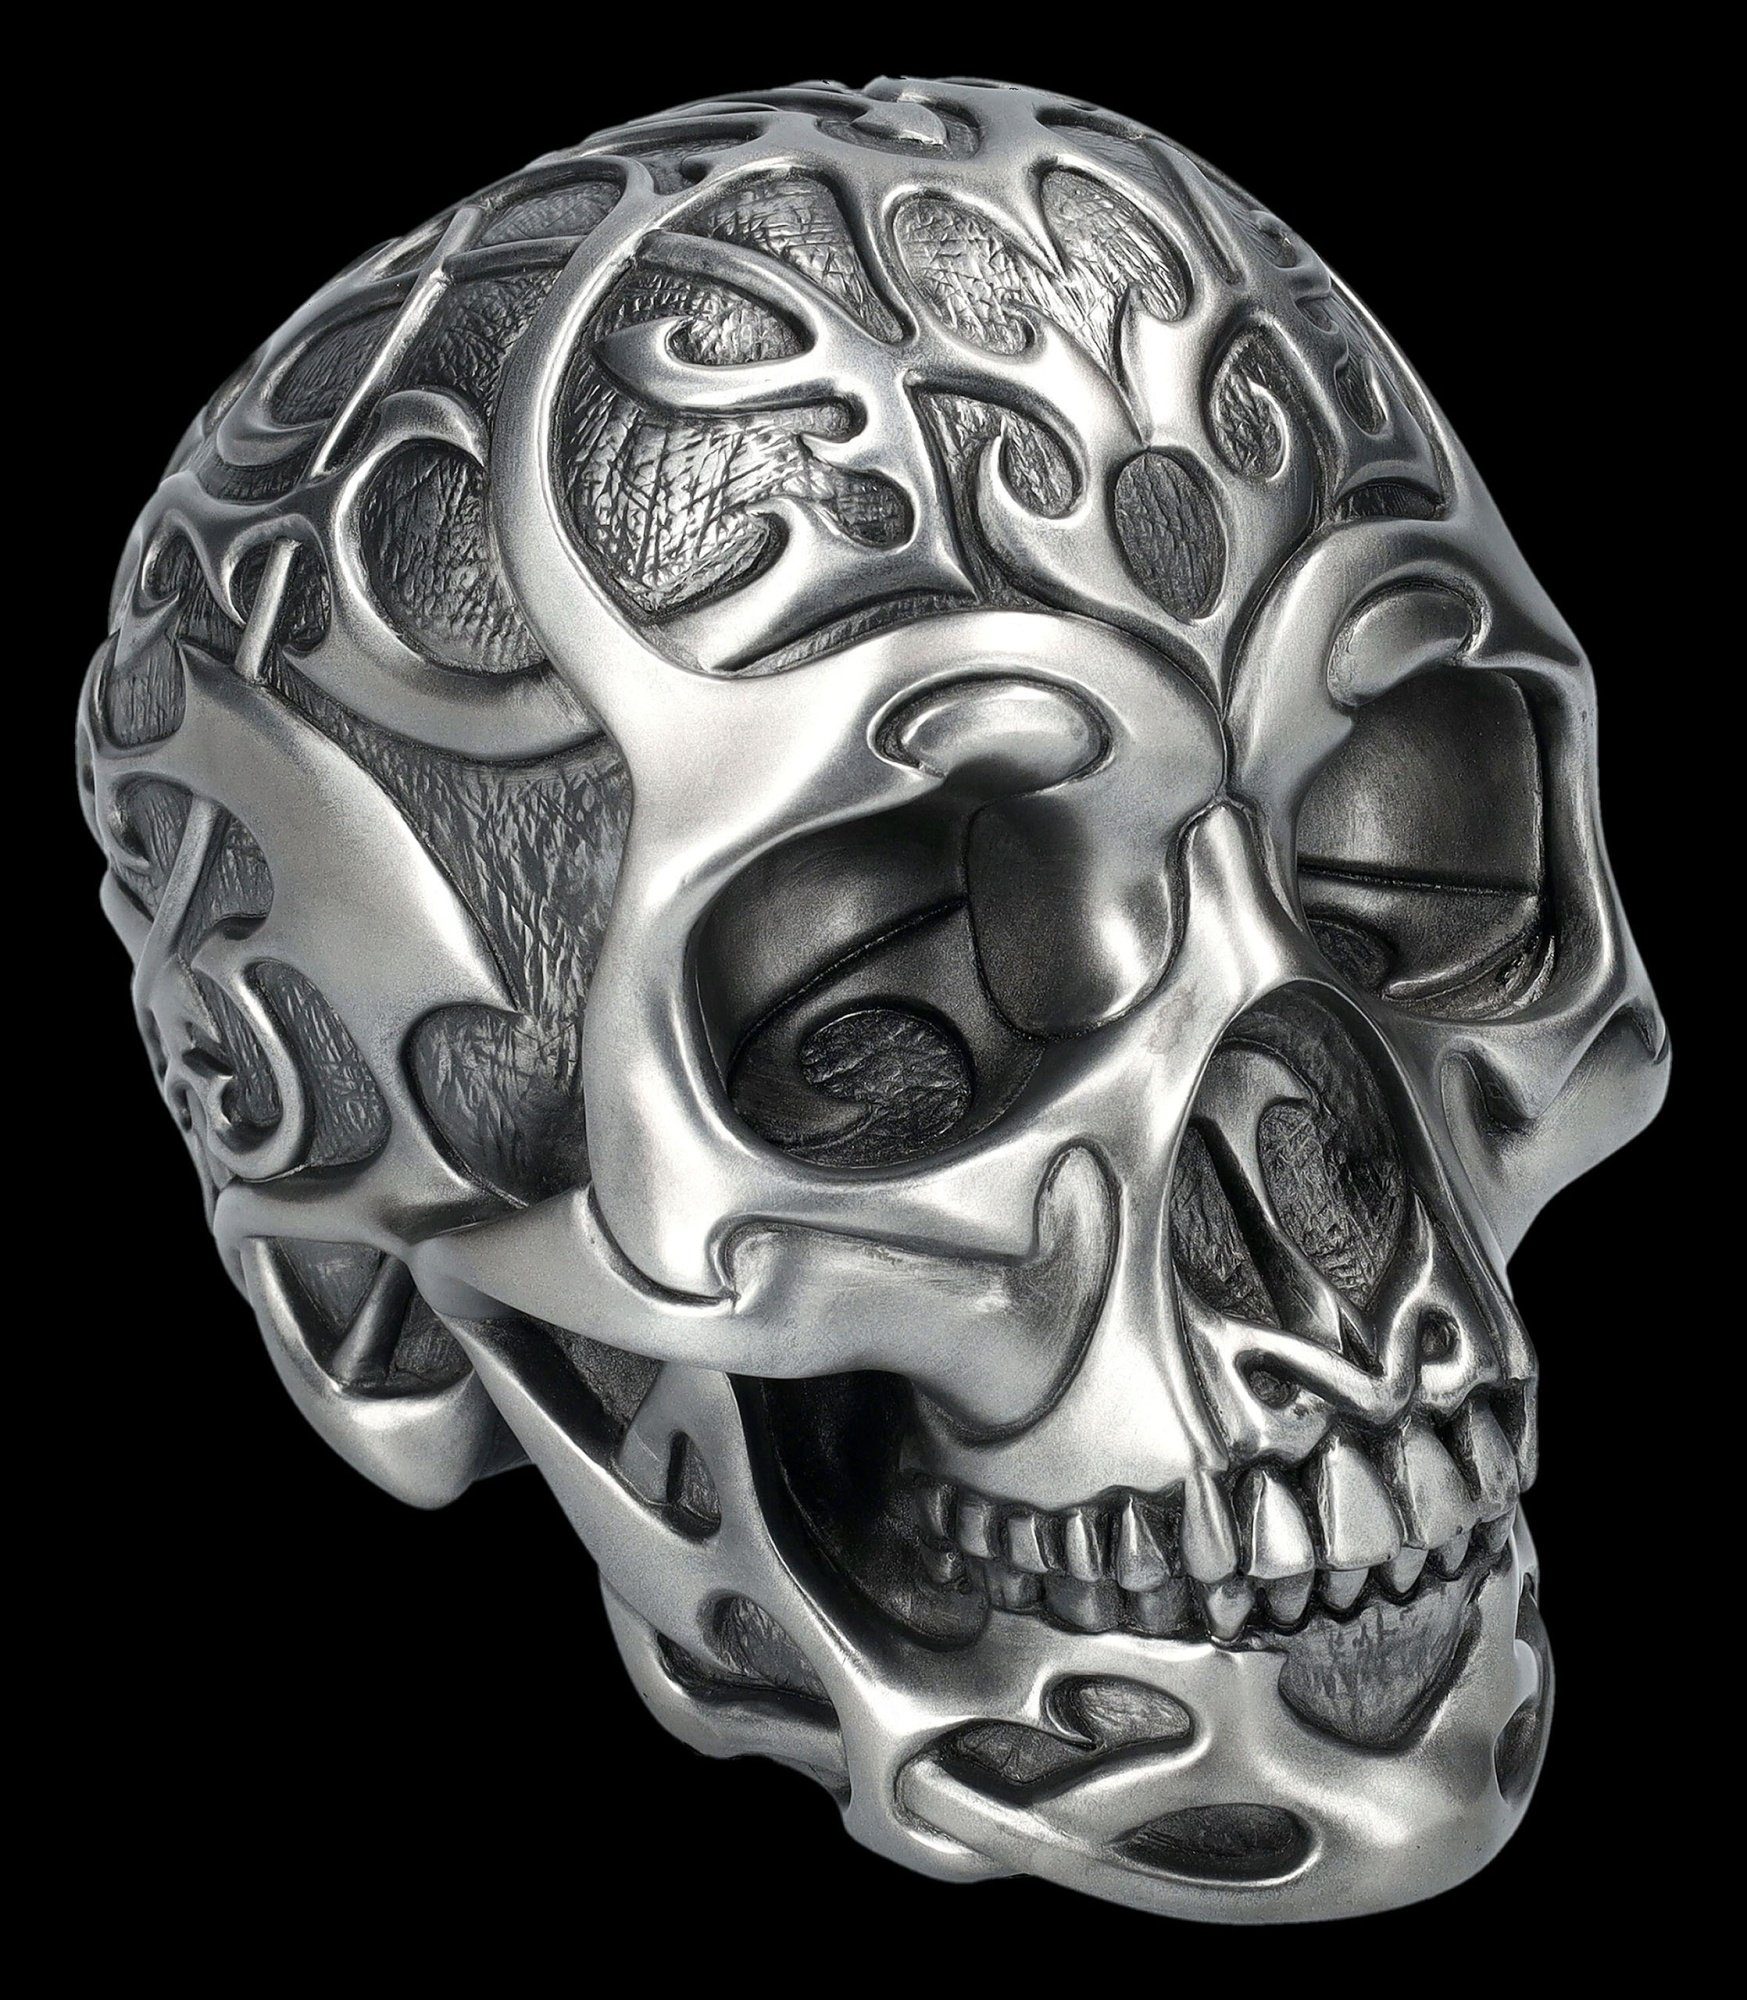 Shop Dekofigur Tribal - Design Totenschädel Gothic silber Clinic GmbH Dekoration Figuren by - Totenkopf Skull